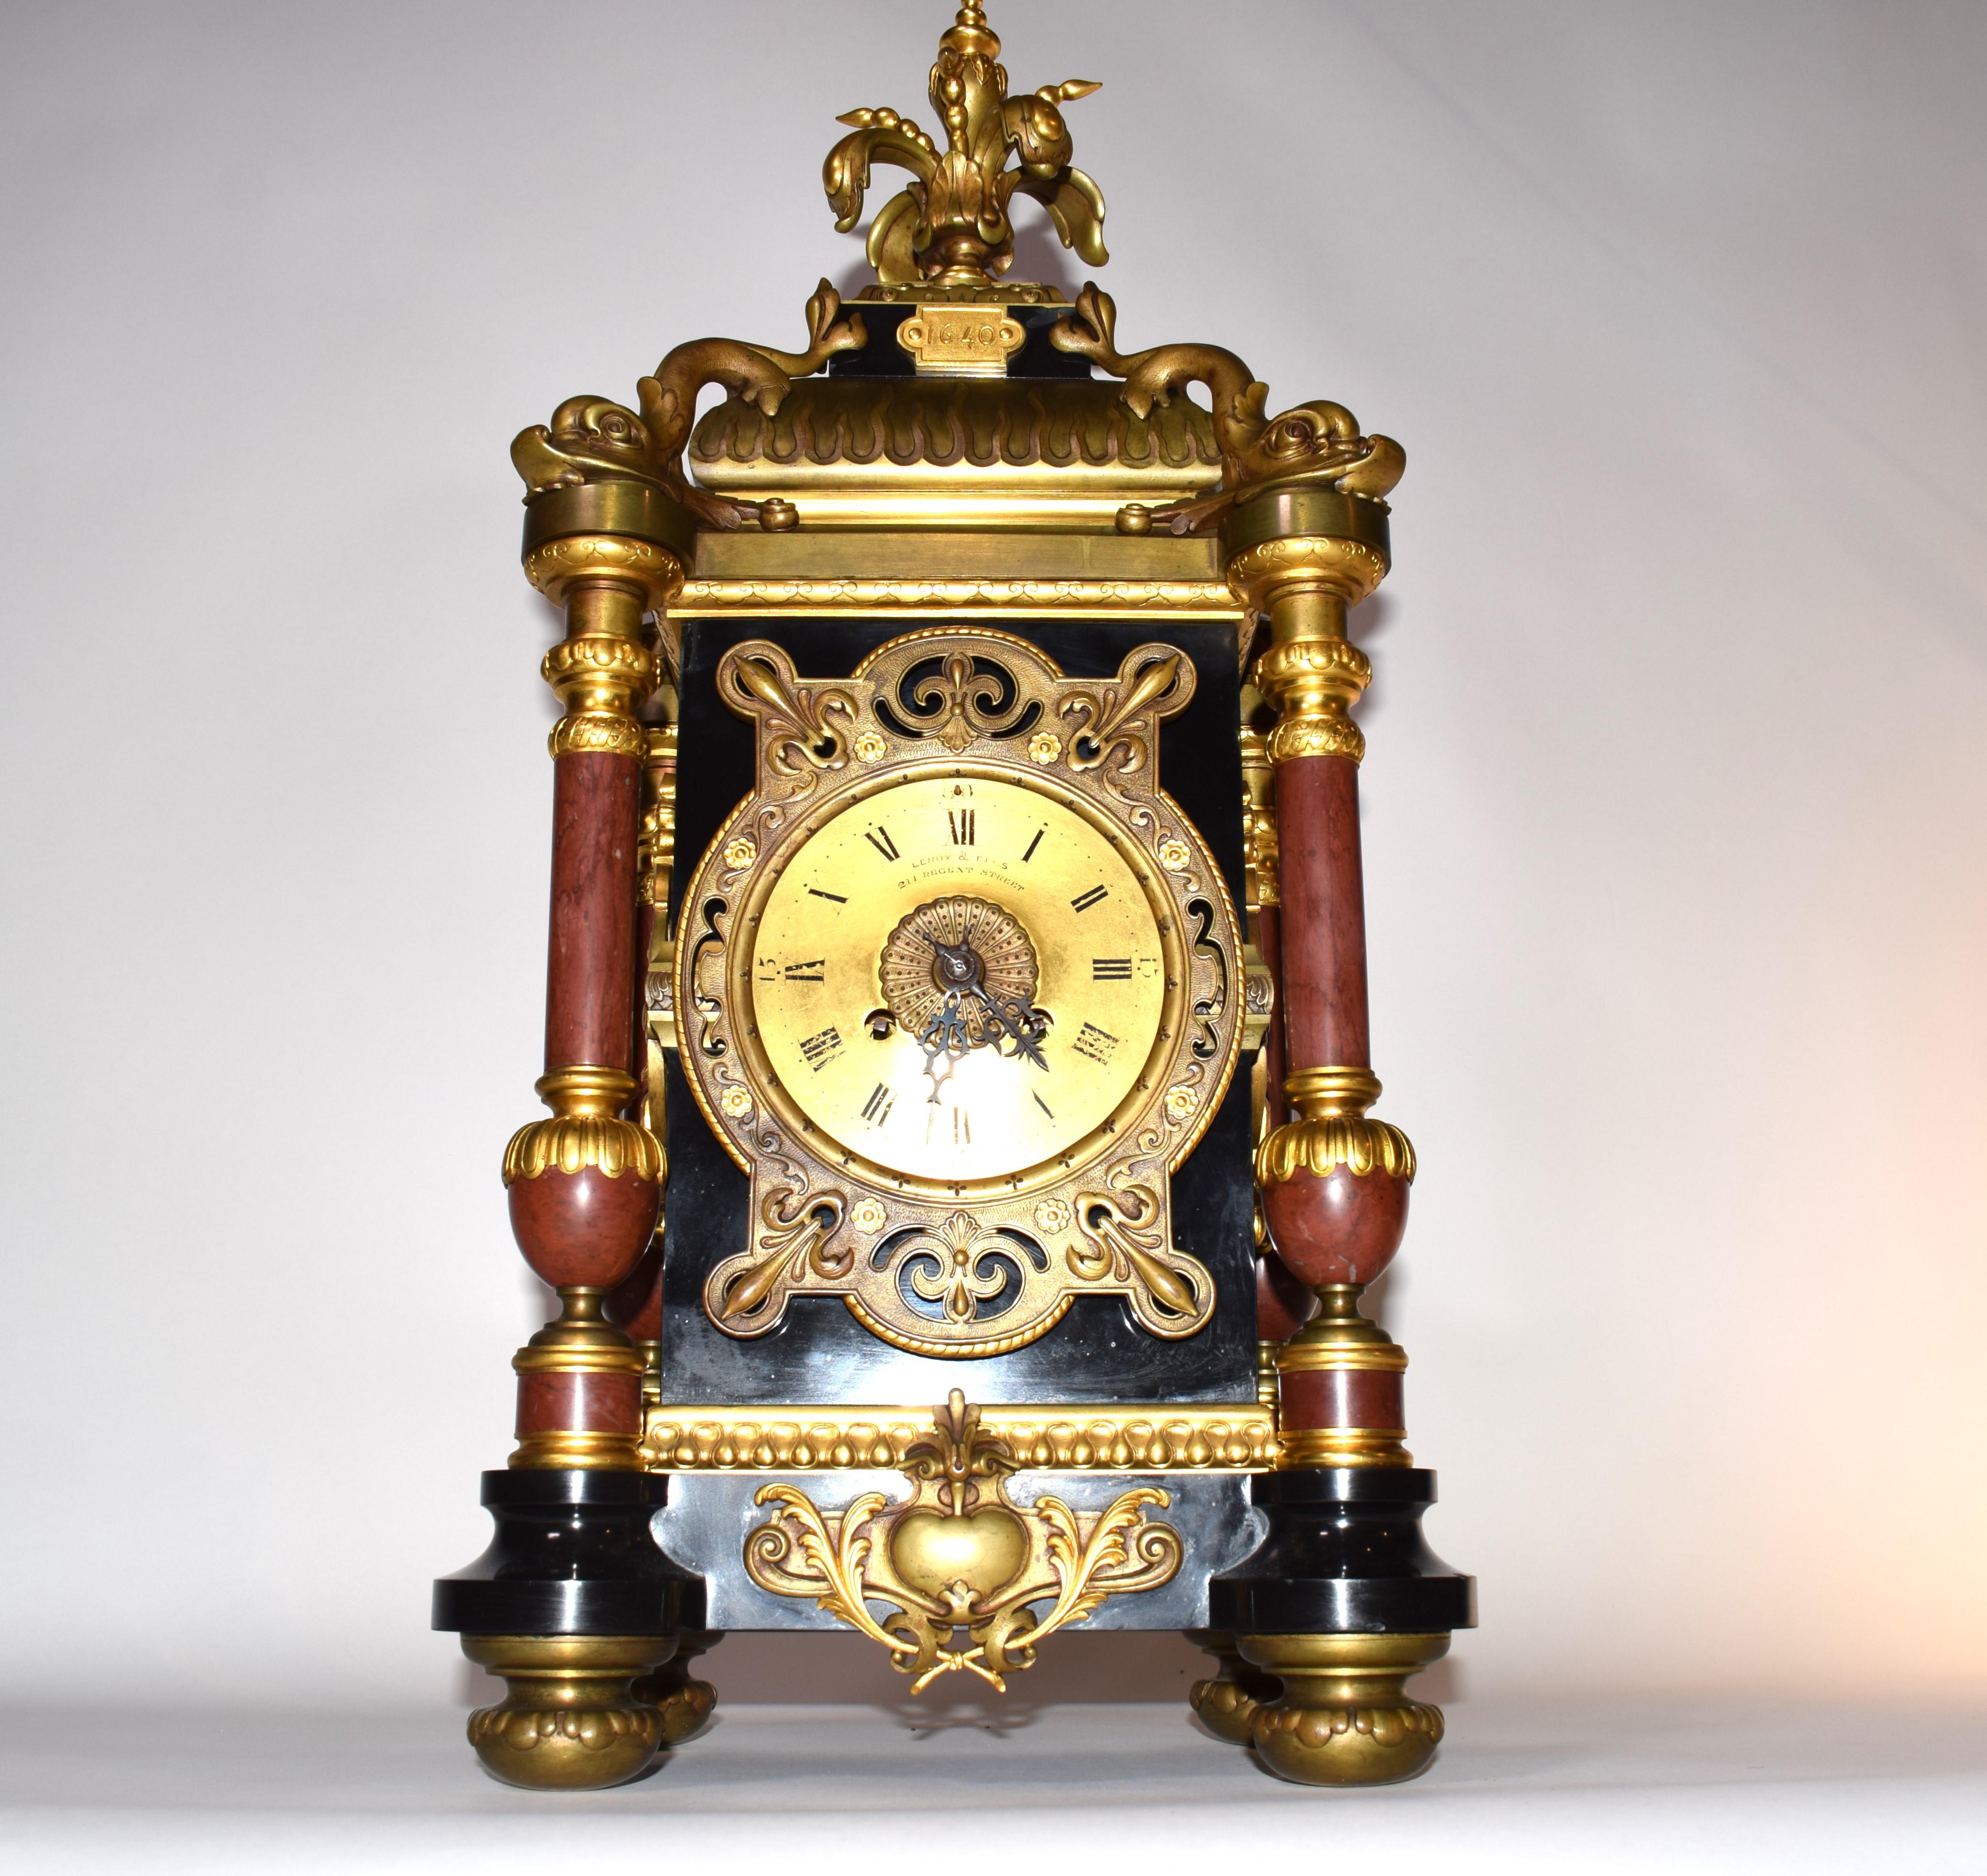 Partial vergoldete Uhr von Le Roy & Fils im Barockstil, Revival im Angebot 10